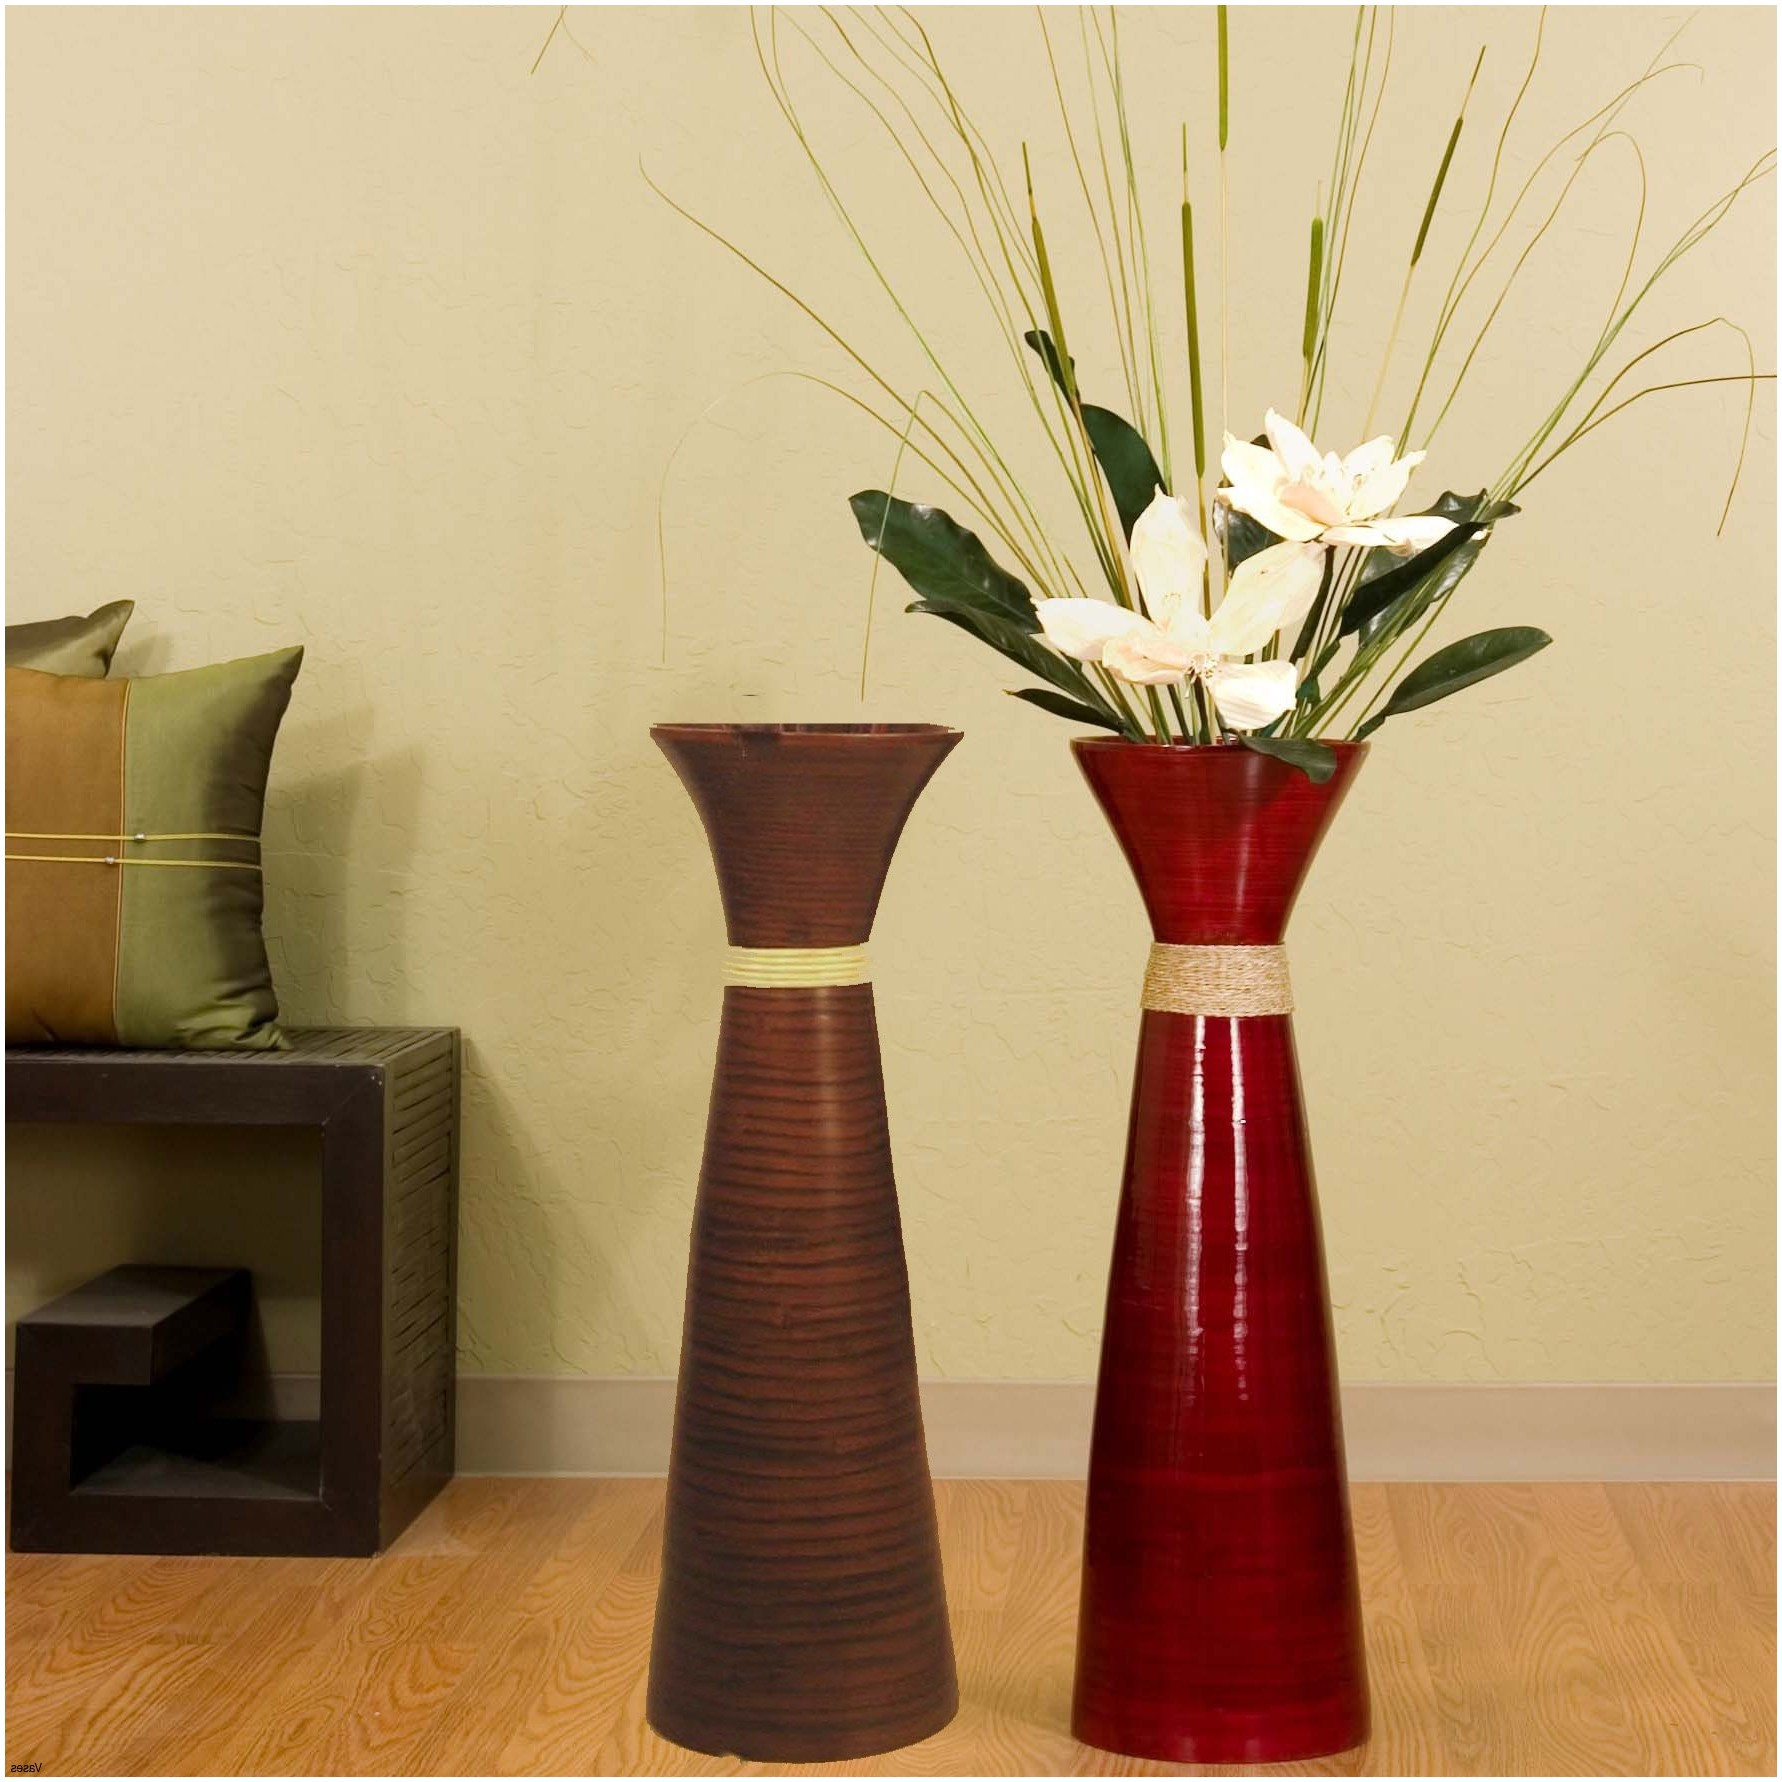 extra large glass floor vases of 21 beau decorative vases anciendemutu org inside floor vase colorsh vases red decorative image colorsi 0d